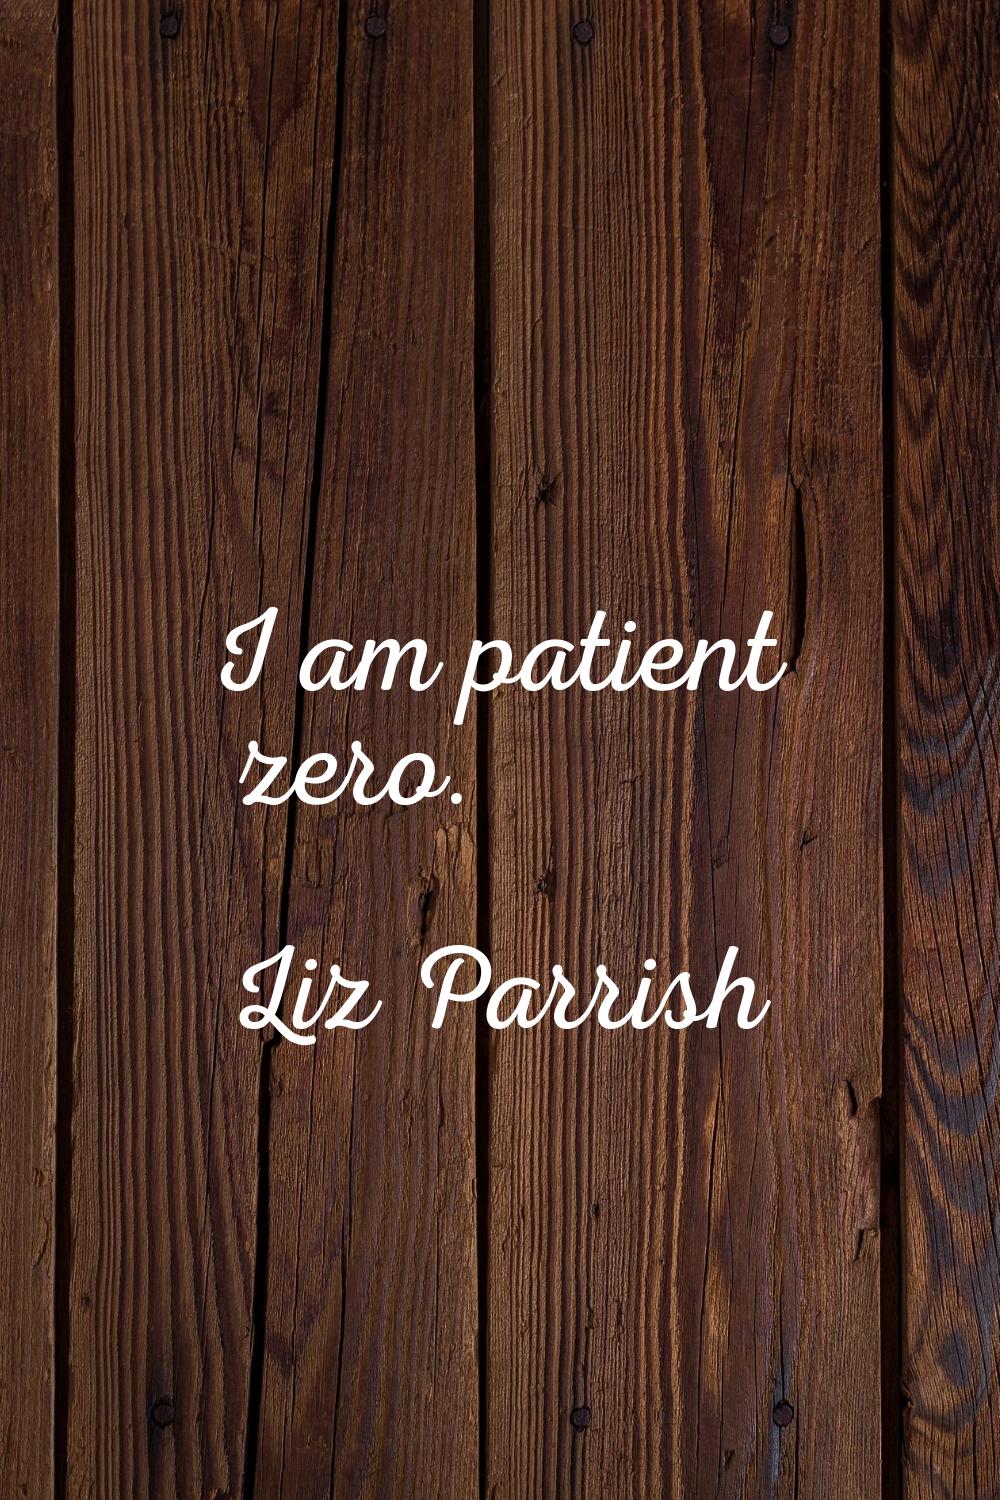 I am patient zero.